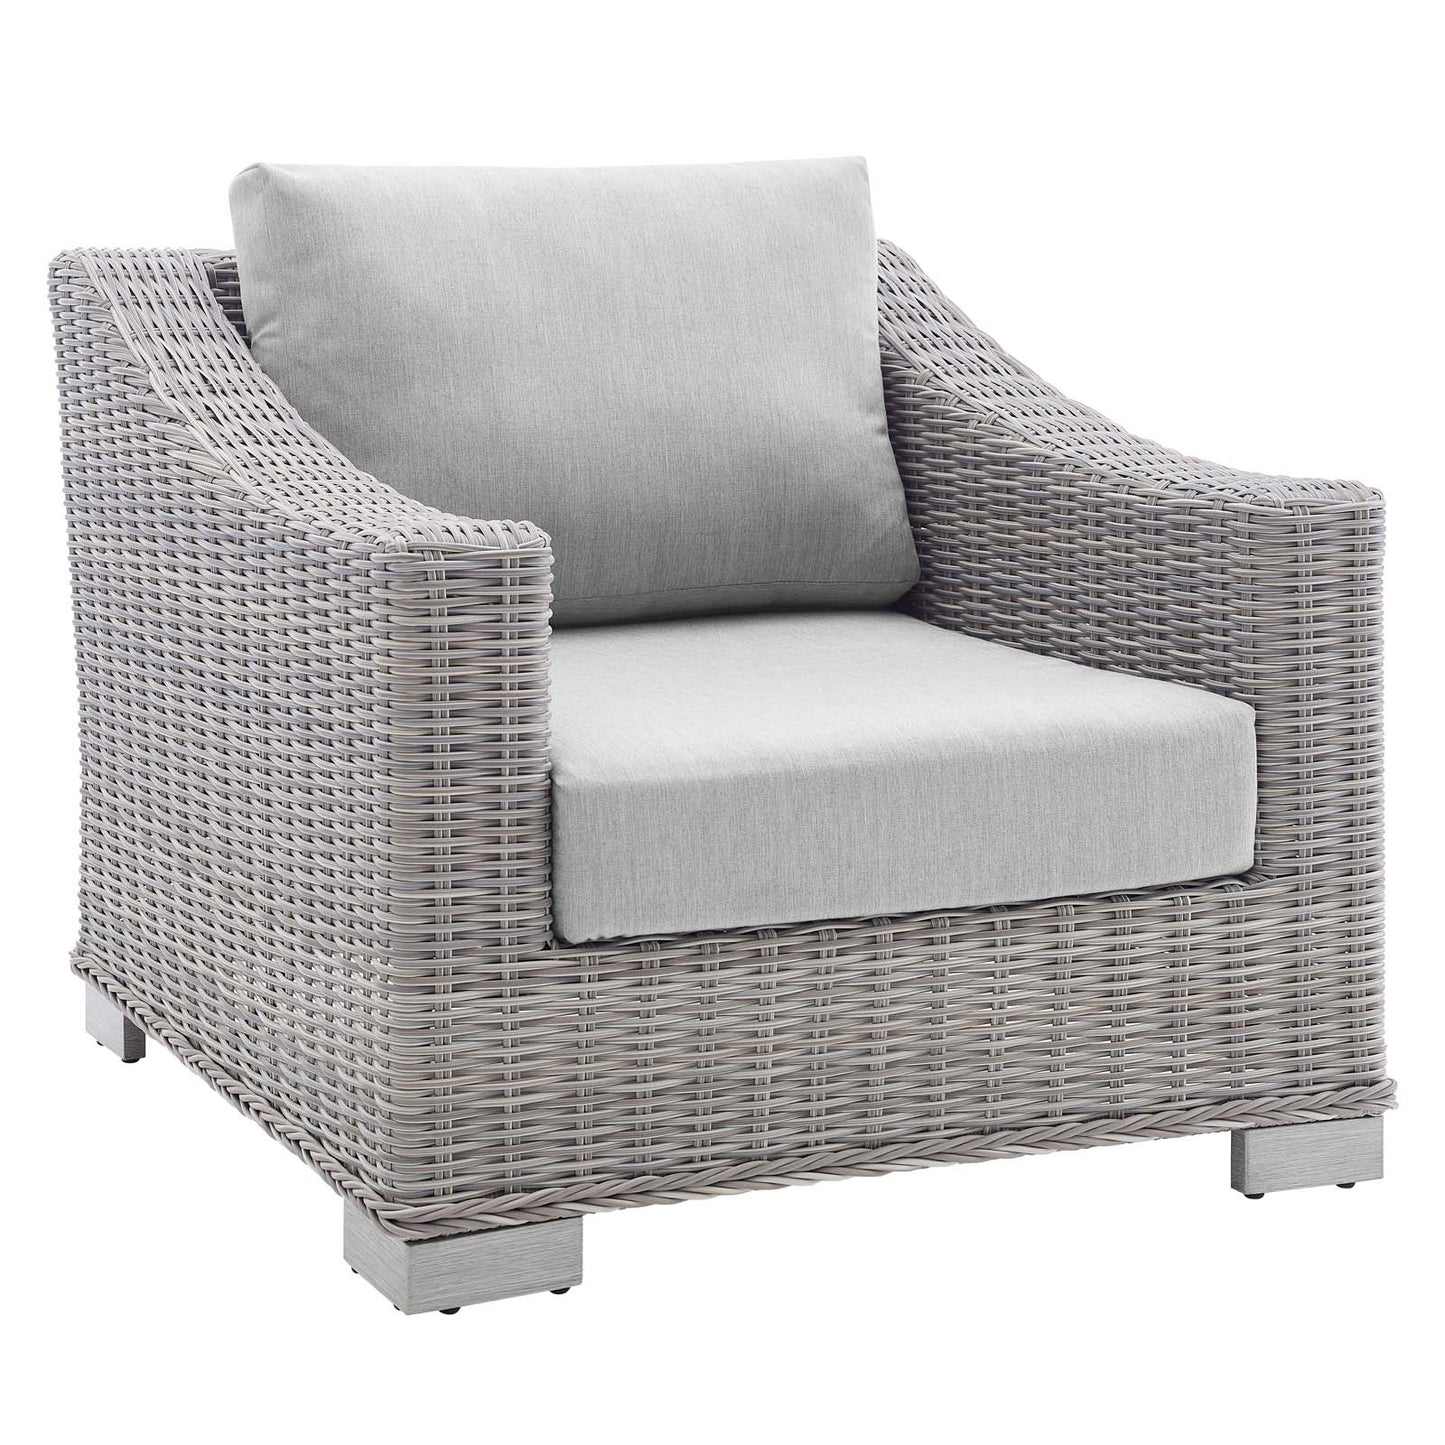 Conway Sunbrella® Outdoor Patio Wicker Rattan 4-Piece Furniture Set Light Gray Gray EEI-4359-LGR-GRY